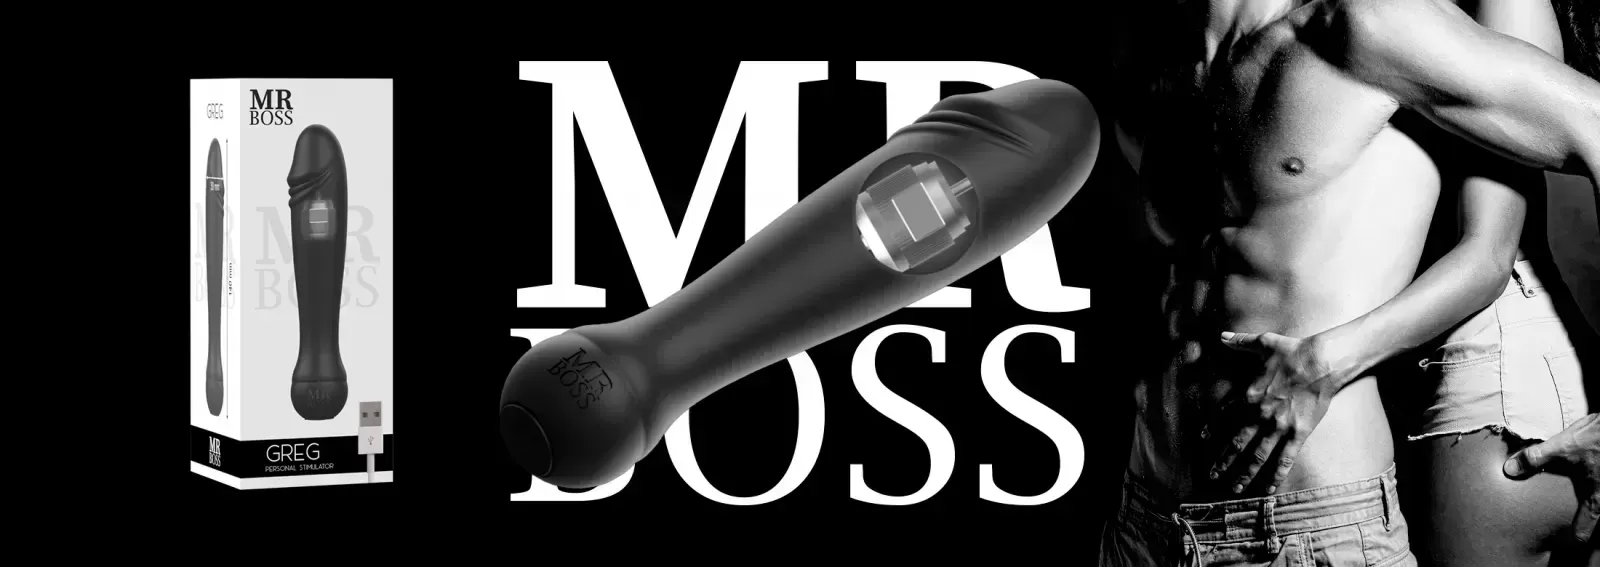 Banner promocional marca Mr Boss